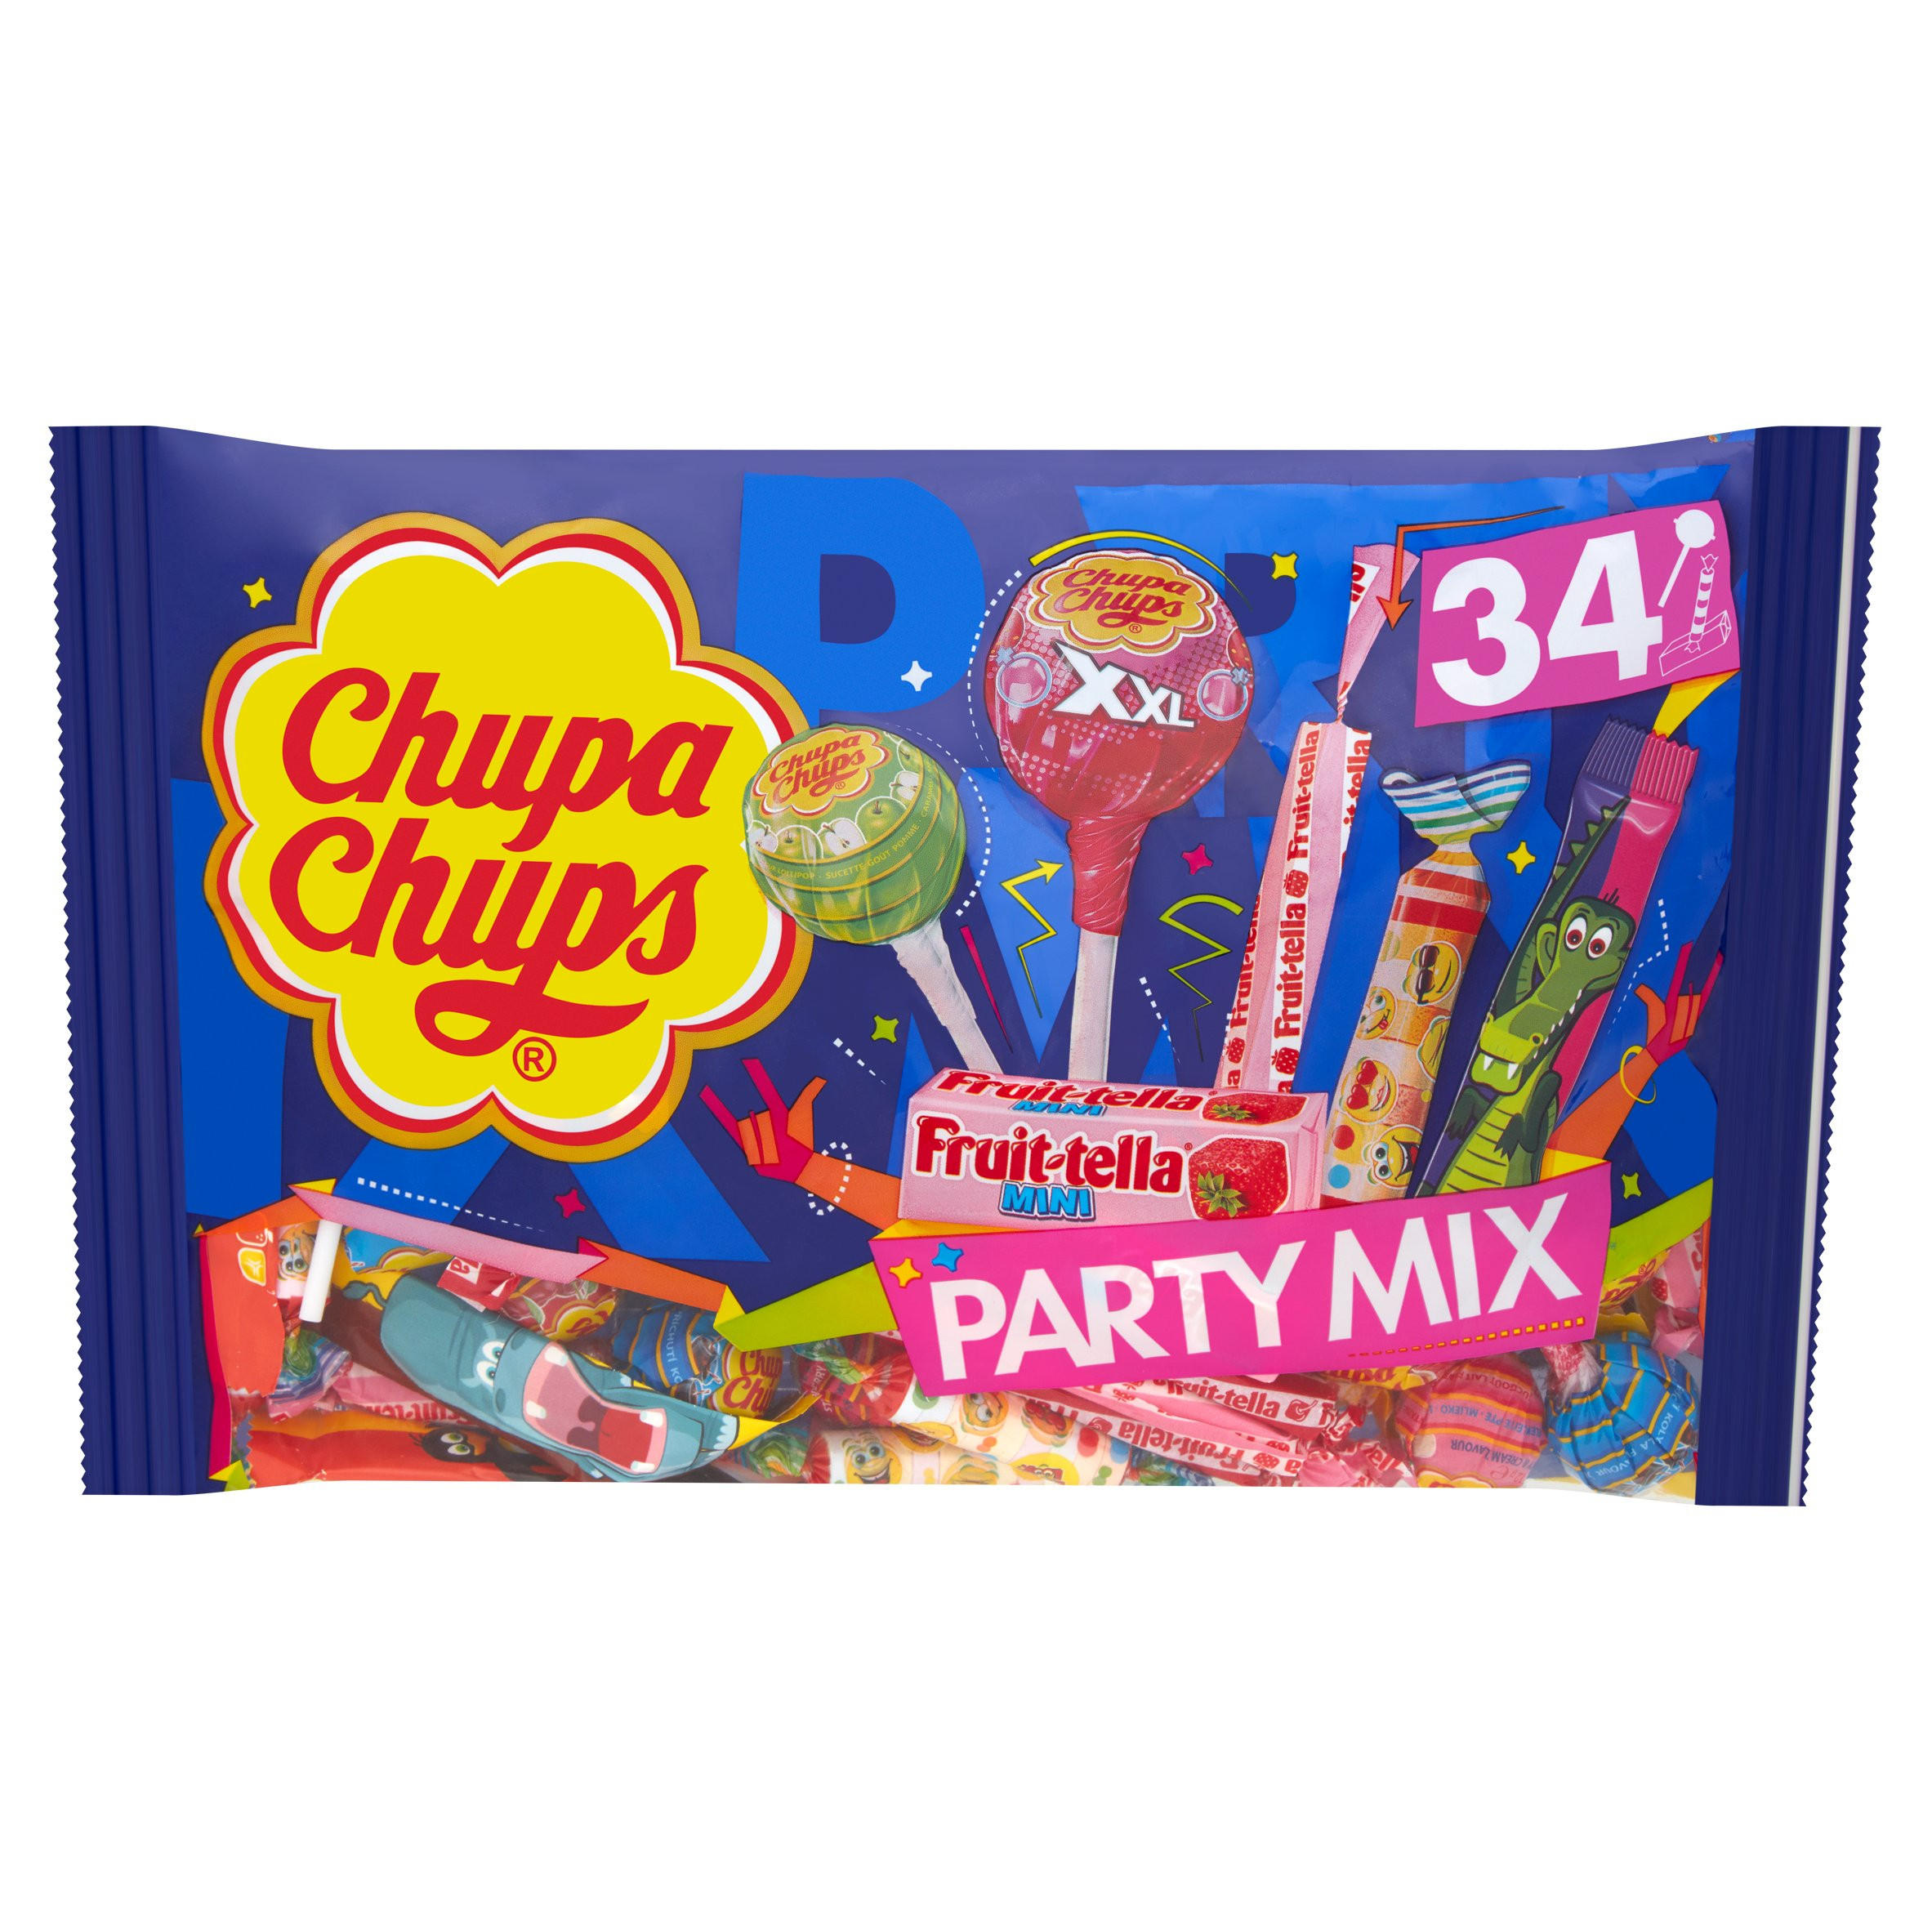 Chupa chups candy. Chupa chups Party time Mix жеват конфеты 380г. Chupa chups 34 Party Mix. Чупа Чупс пати микс "Хеллоуин" 1/8/380 г (8254381). Новогодний подарок Чупа Чупс Фрутелла.